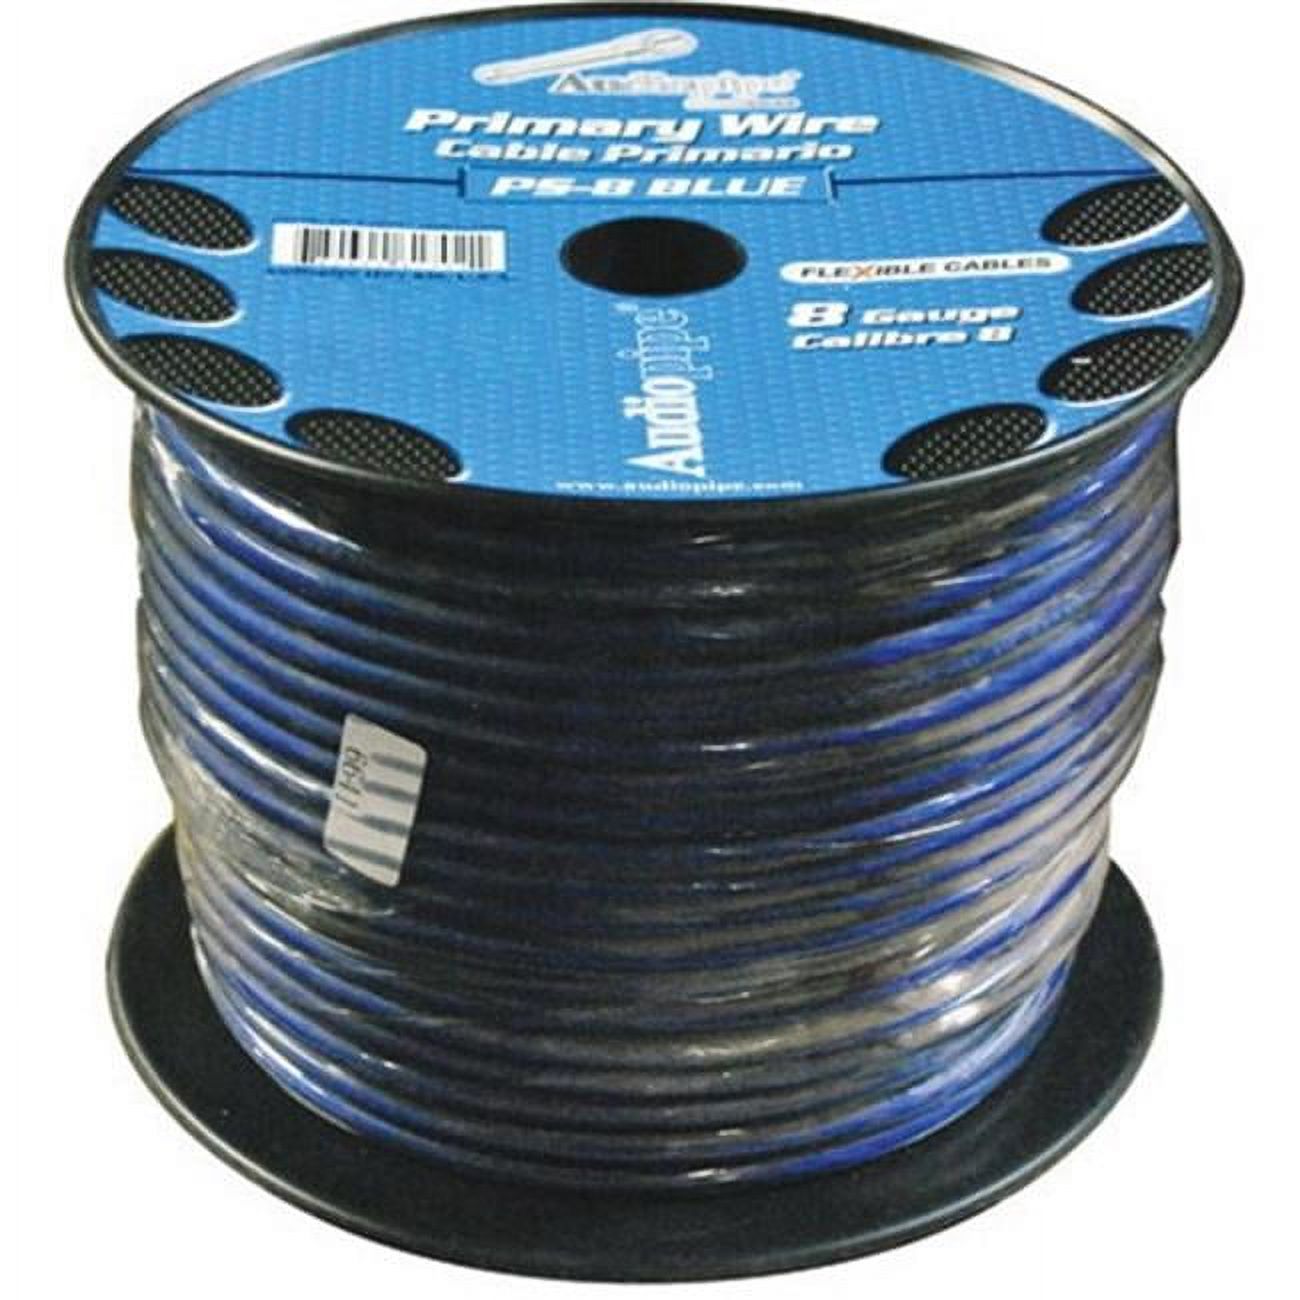 Audiopipe Power Wire 8 Gauge Blue 250 ft. roll - image 1 of 3